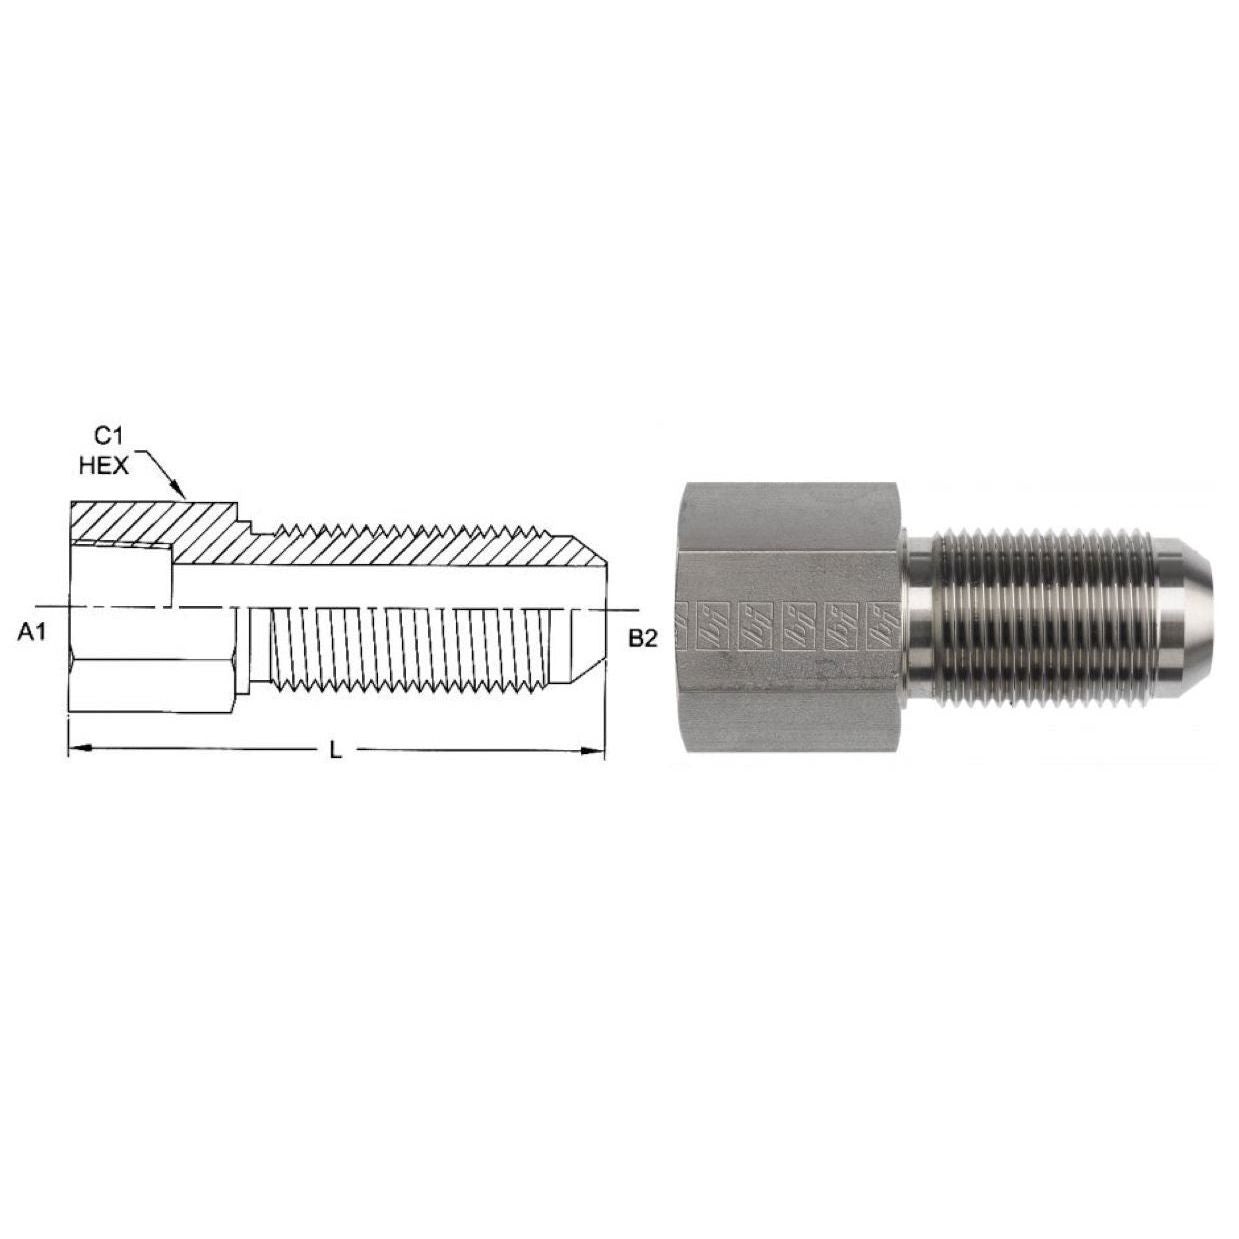 2705-08-08-SS : OneHydraulics Bulkhead Adapter, Straight, 0.5 (1/2") JIC JIC x 0.5 (1/2") Male, Stainless Steel, 6000psi